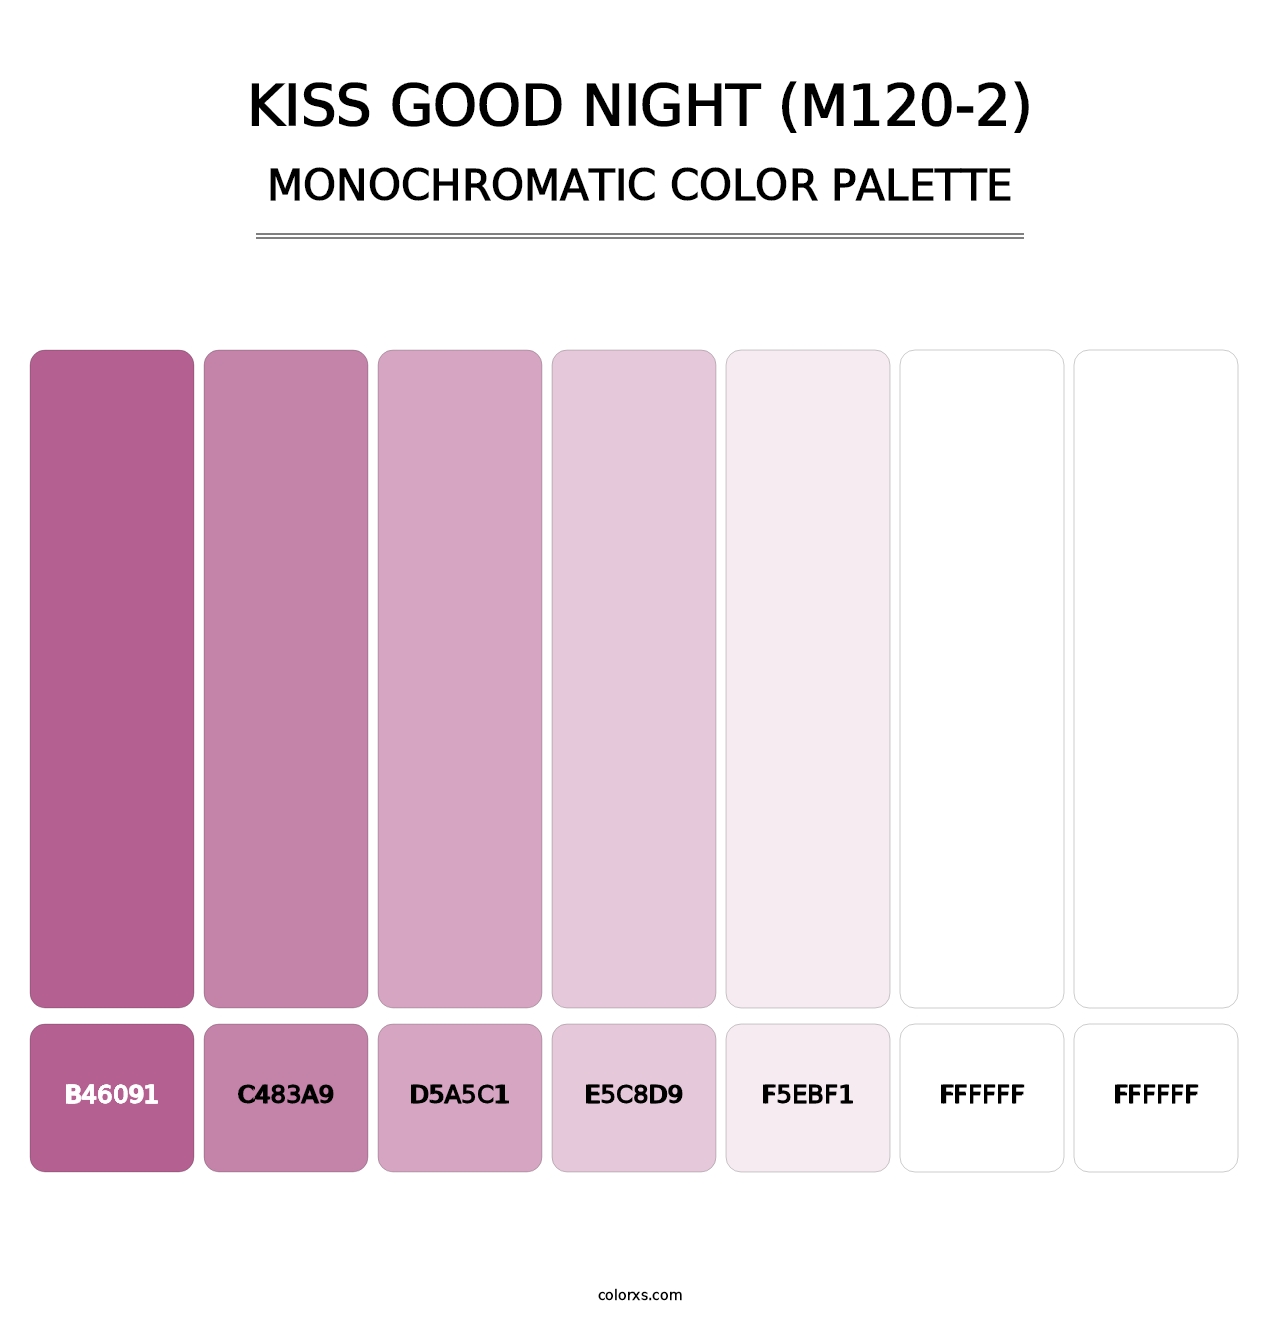 Kiss Good Night (M120-2) - Monochromatic Color Palette